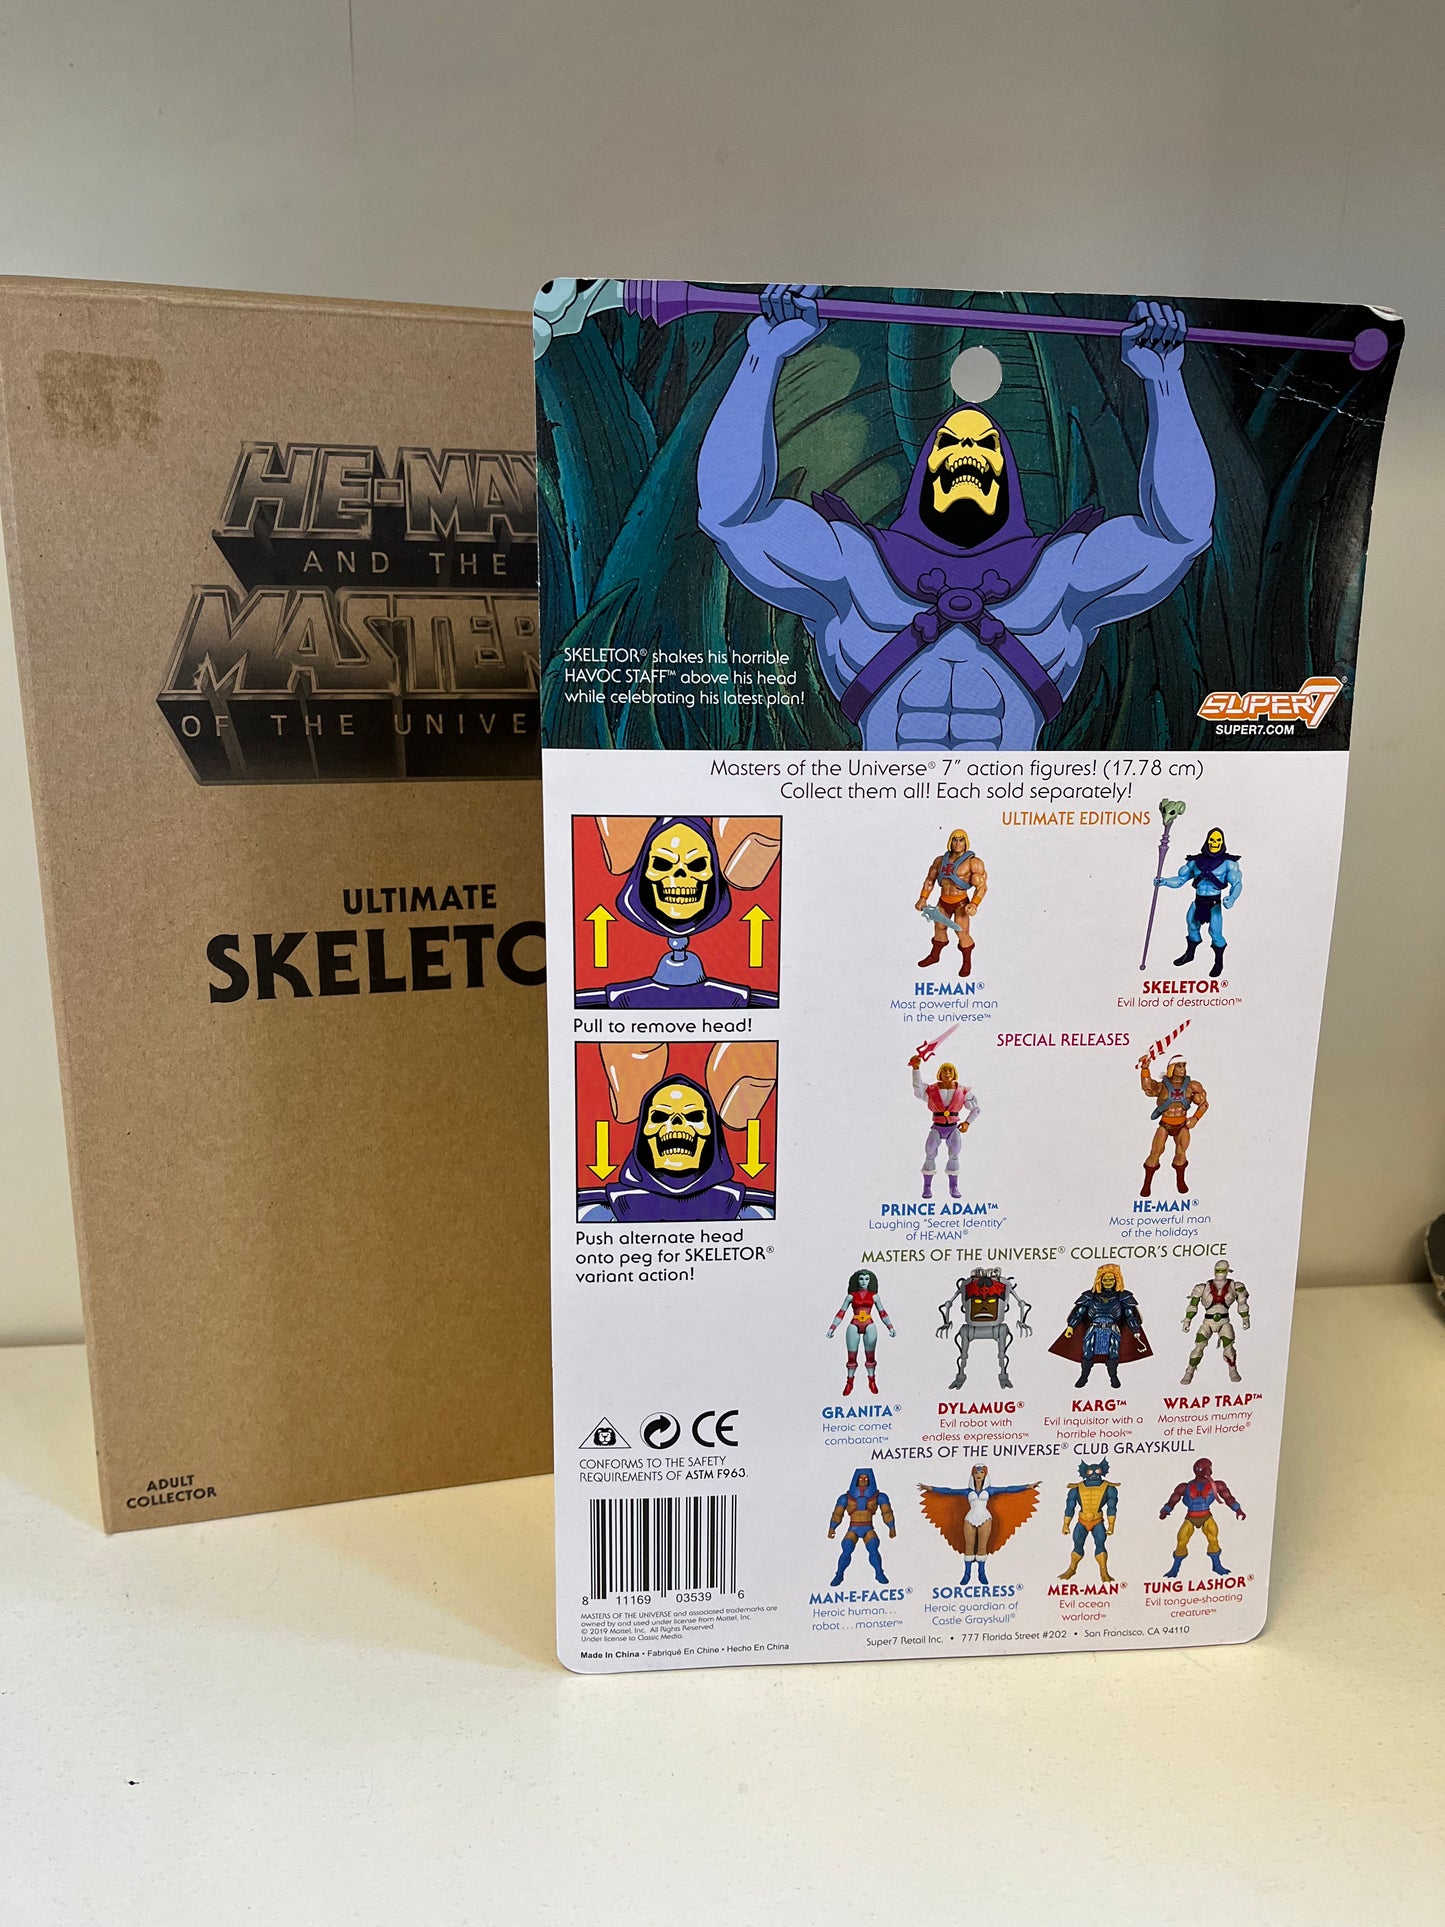 Super 7 MOTU Ultimate Skeletor